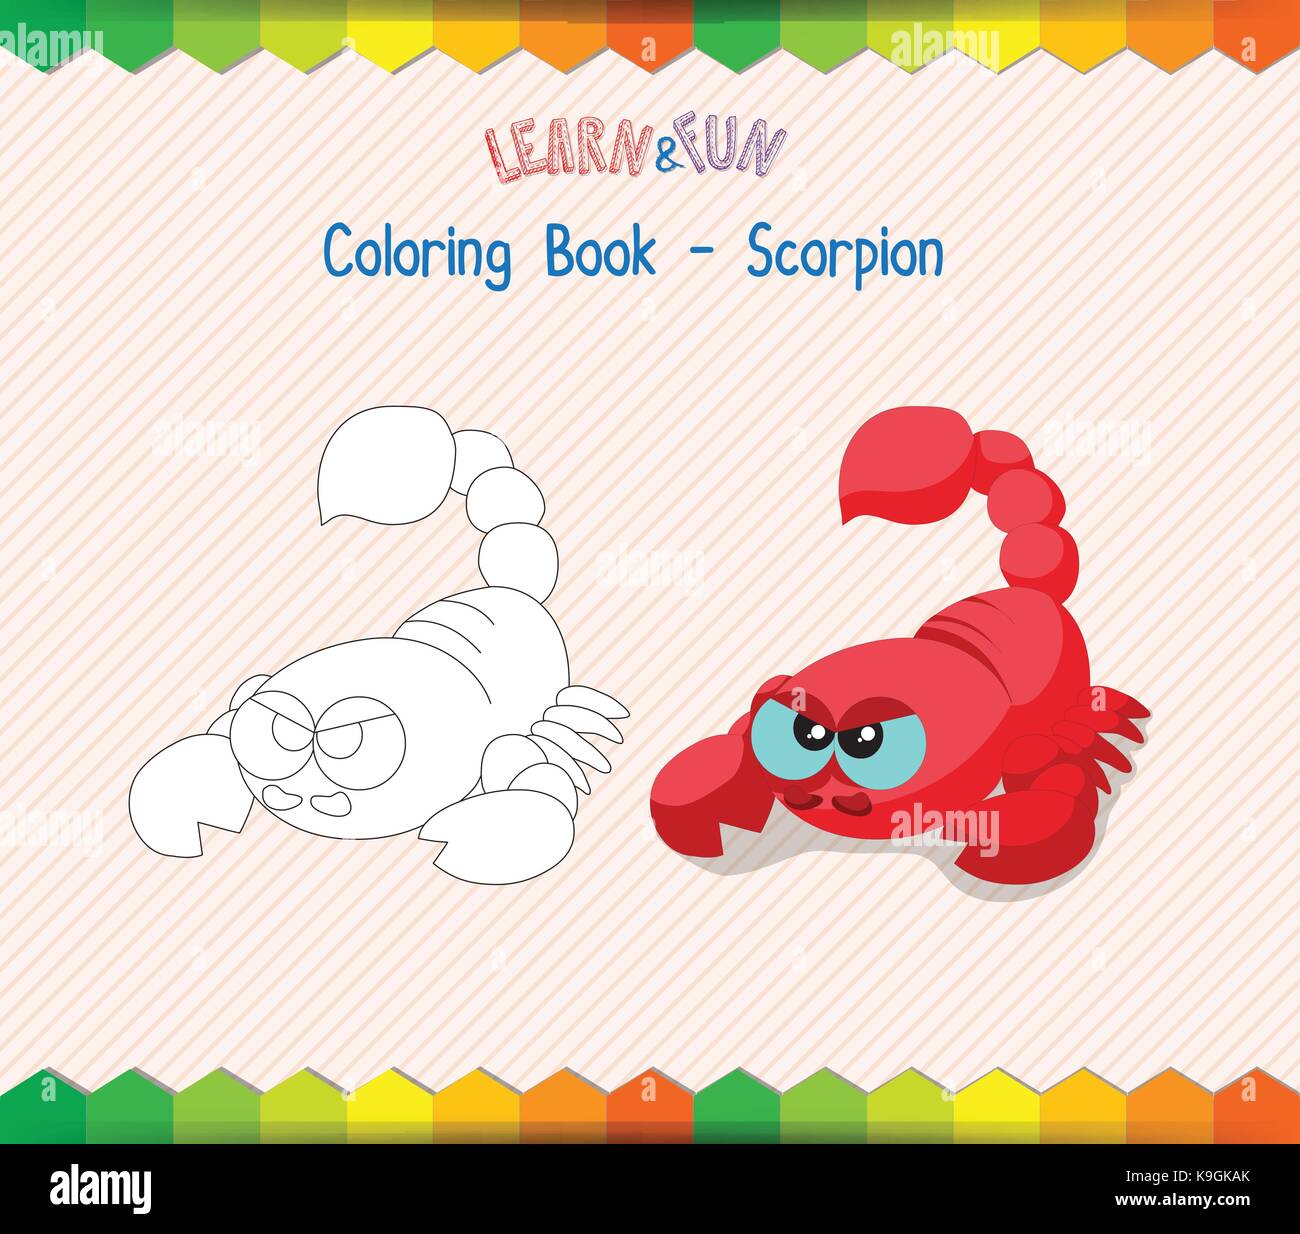 Scorpion coloring book educational game Stock Vector